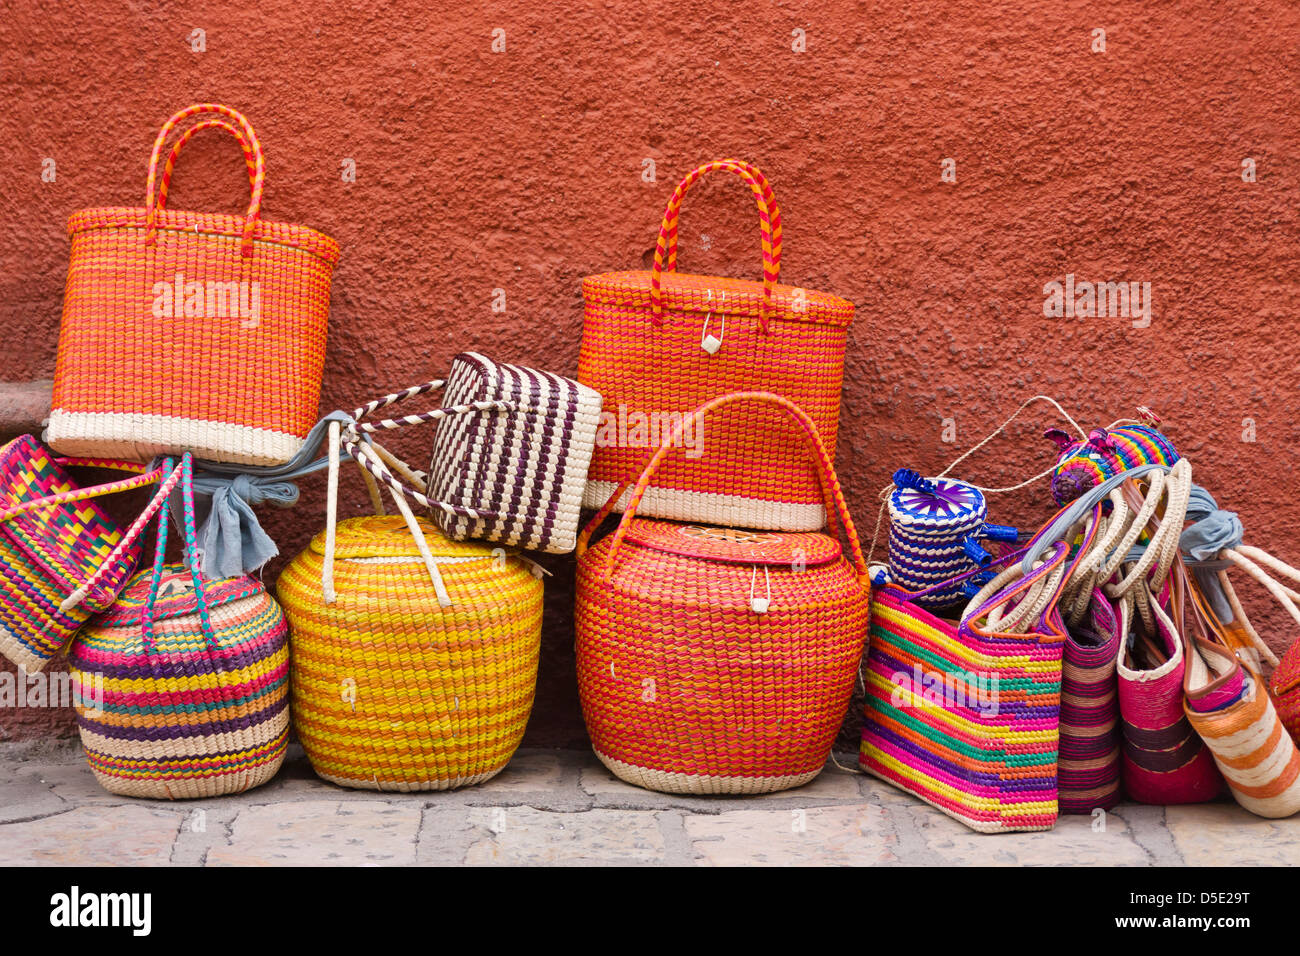 Selling colorful baskets, San Miguel de Allende, Mexico Stock Photo